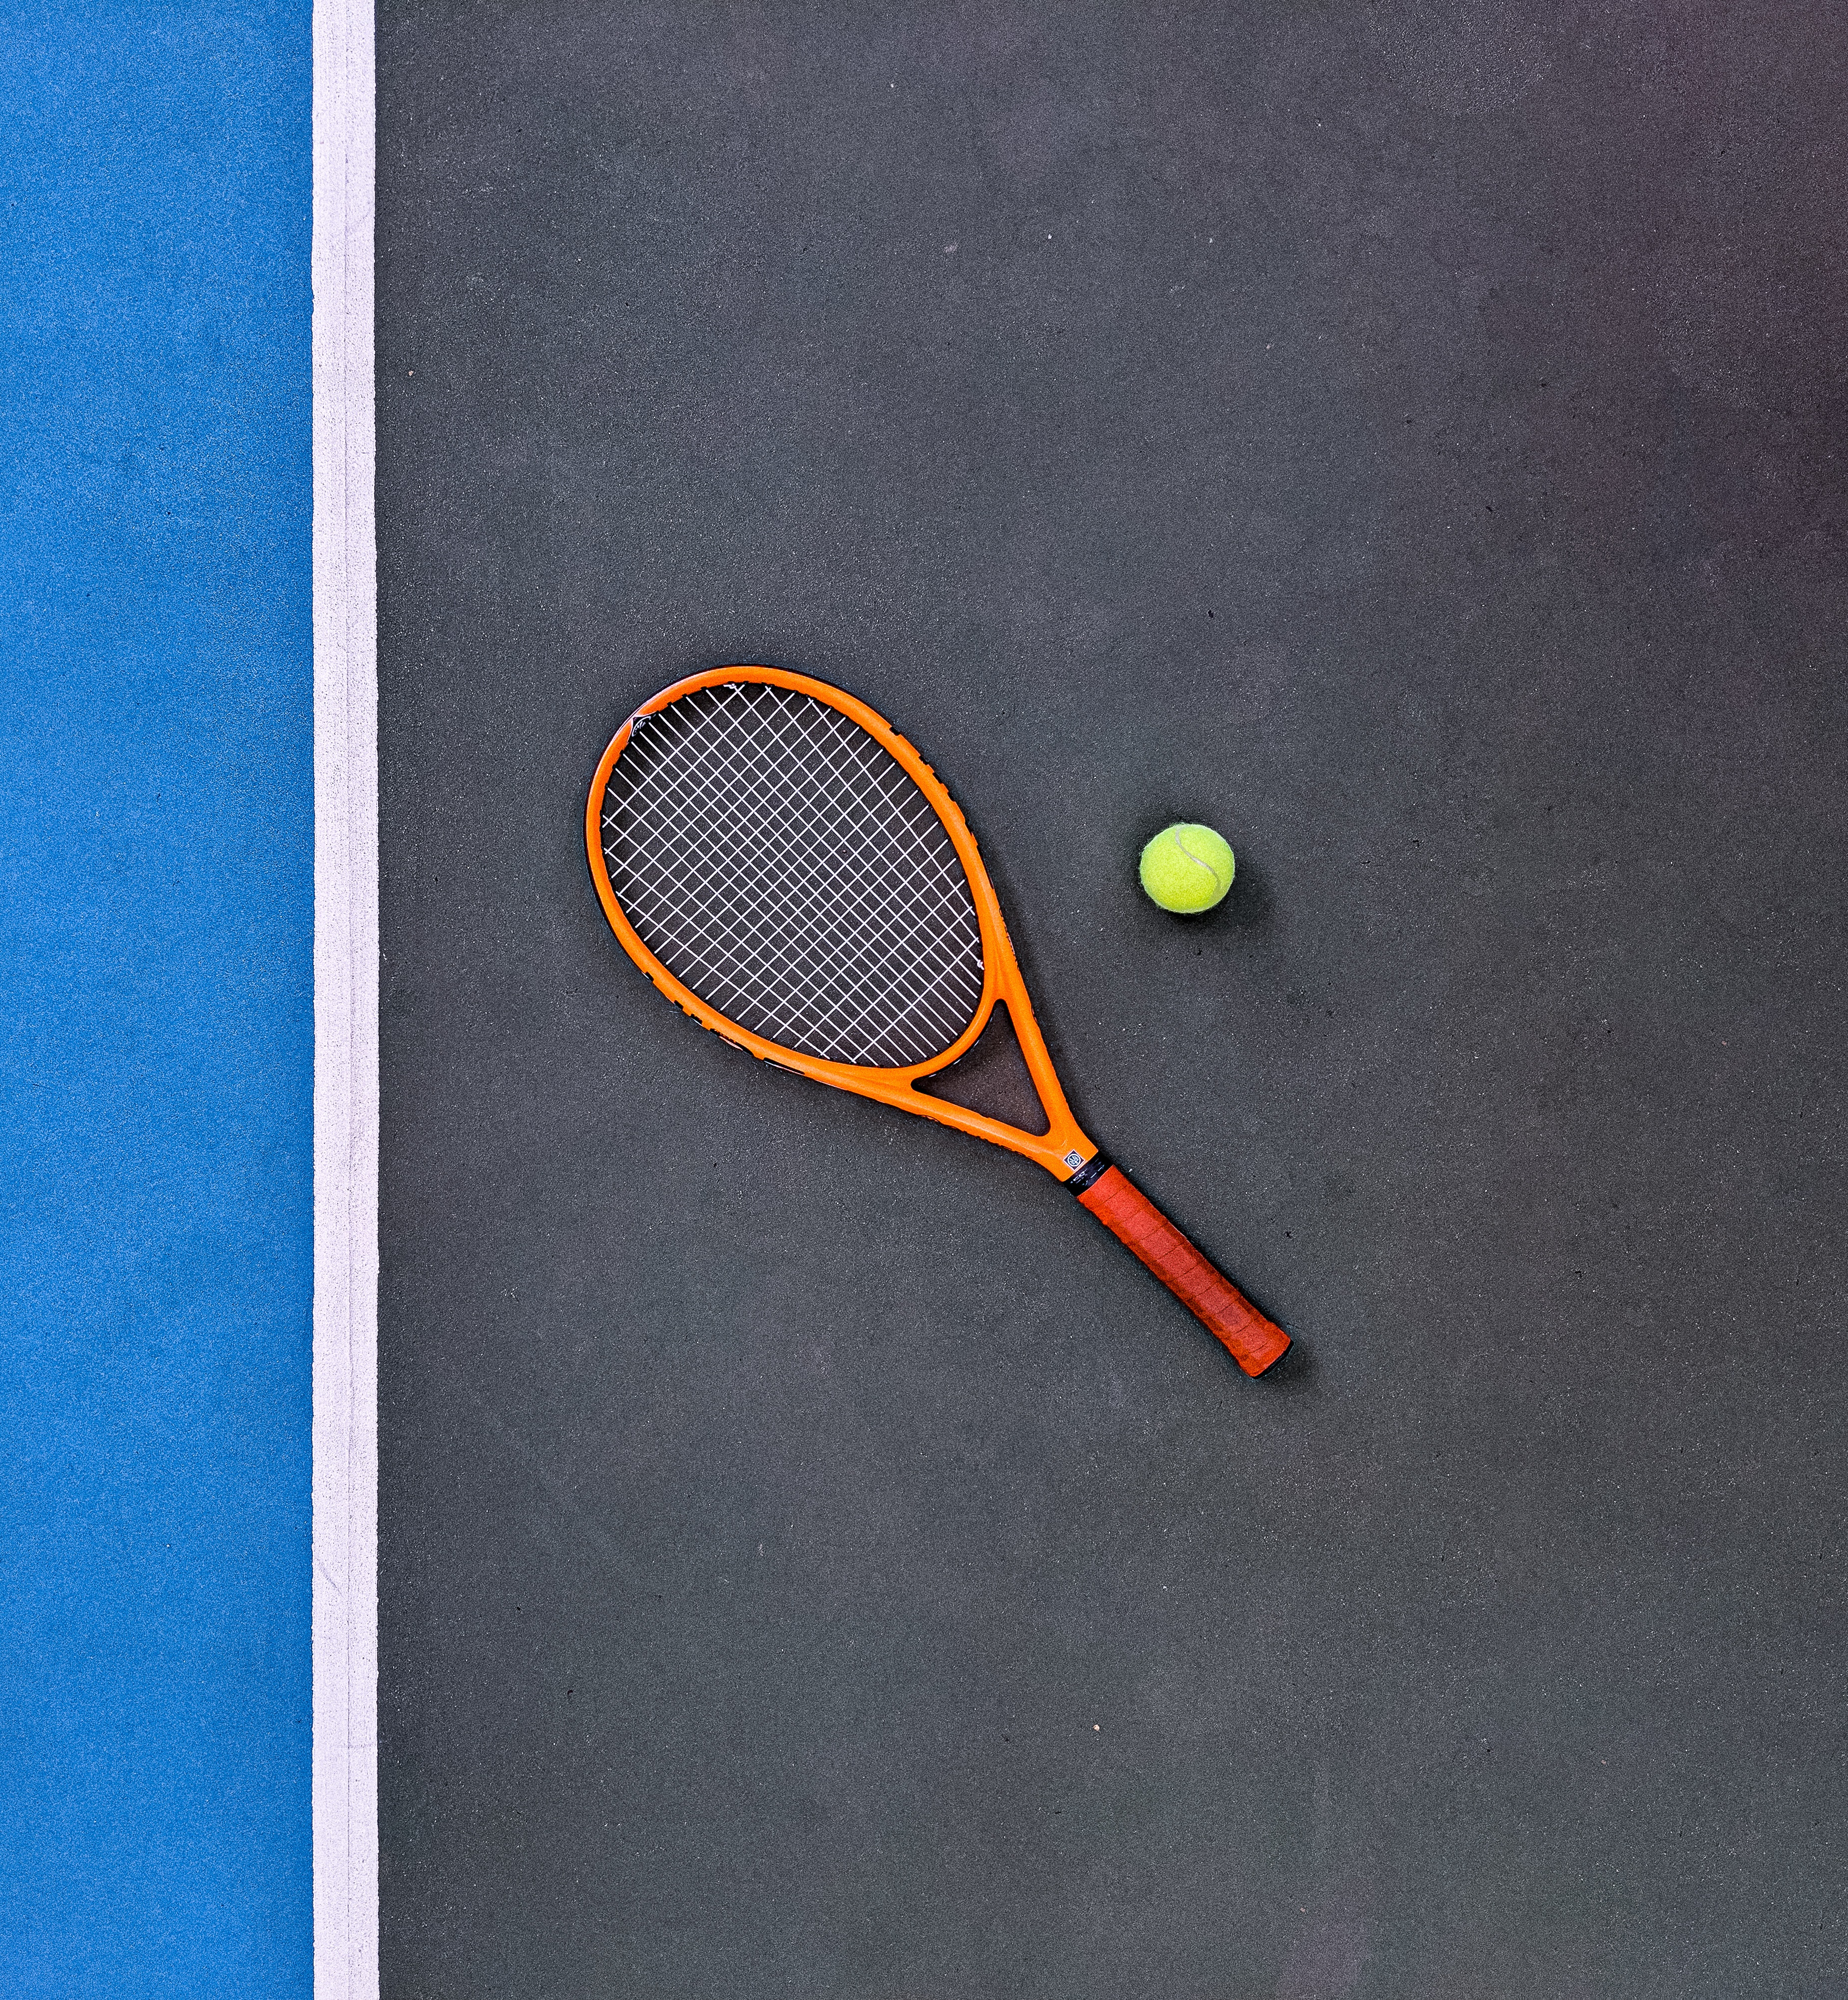 A tennis racket and ball on a tennis court - Tennis